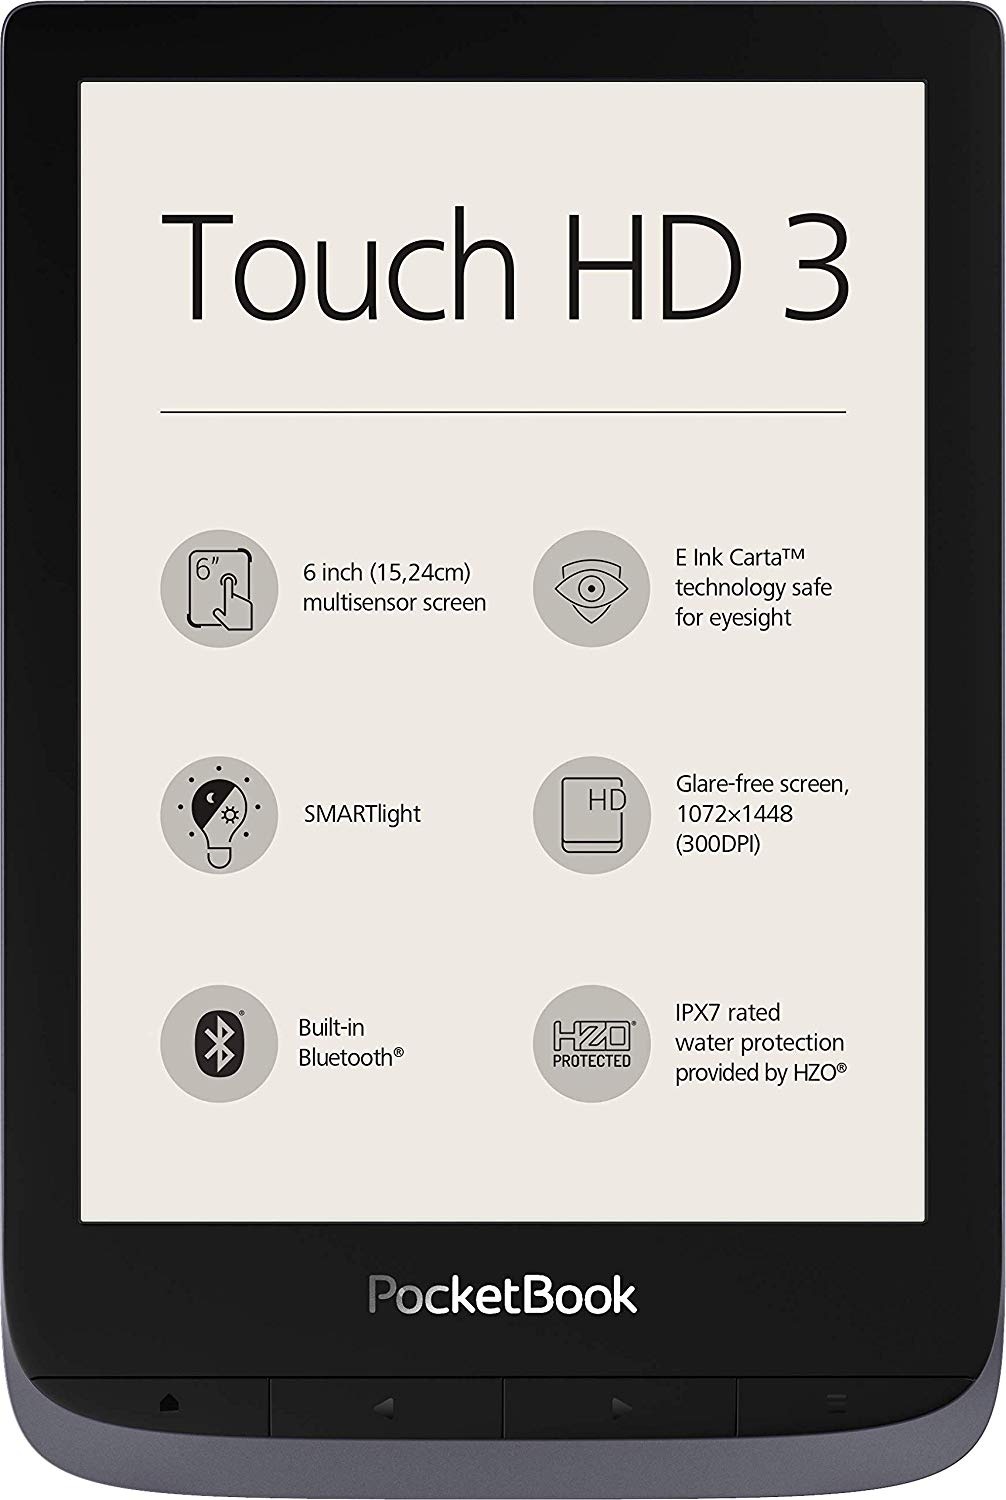 Bild Touch HD 3 metallic grey